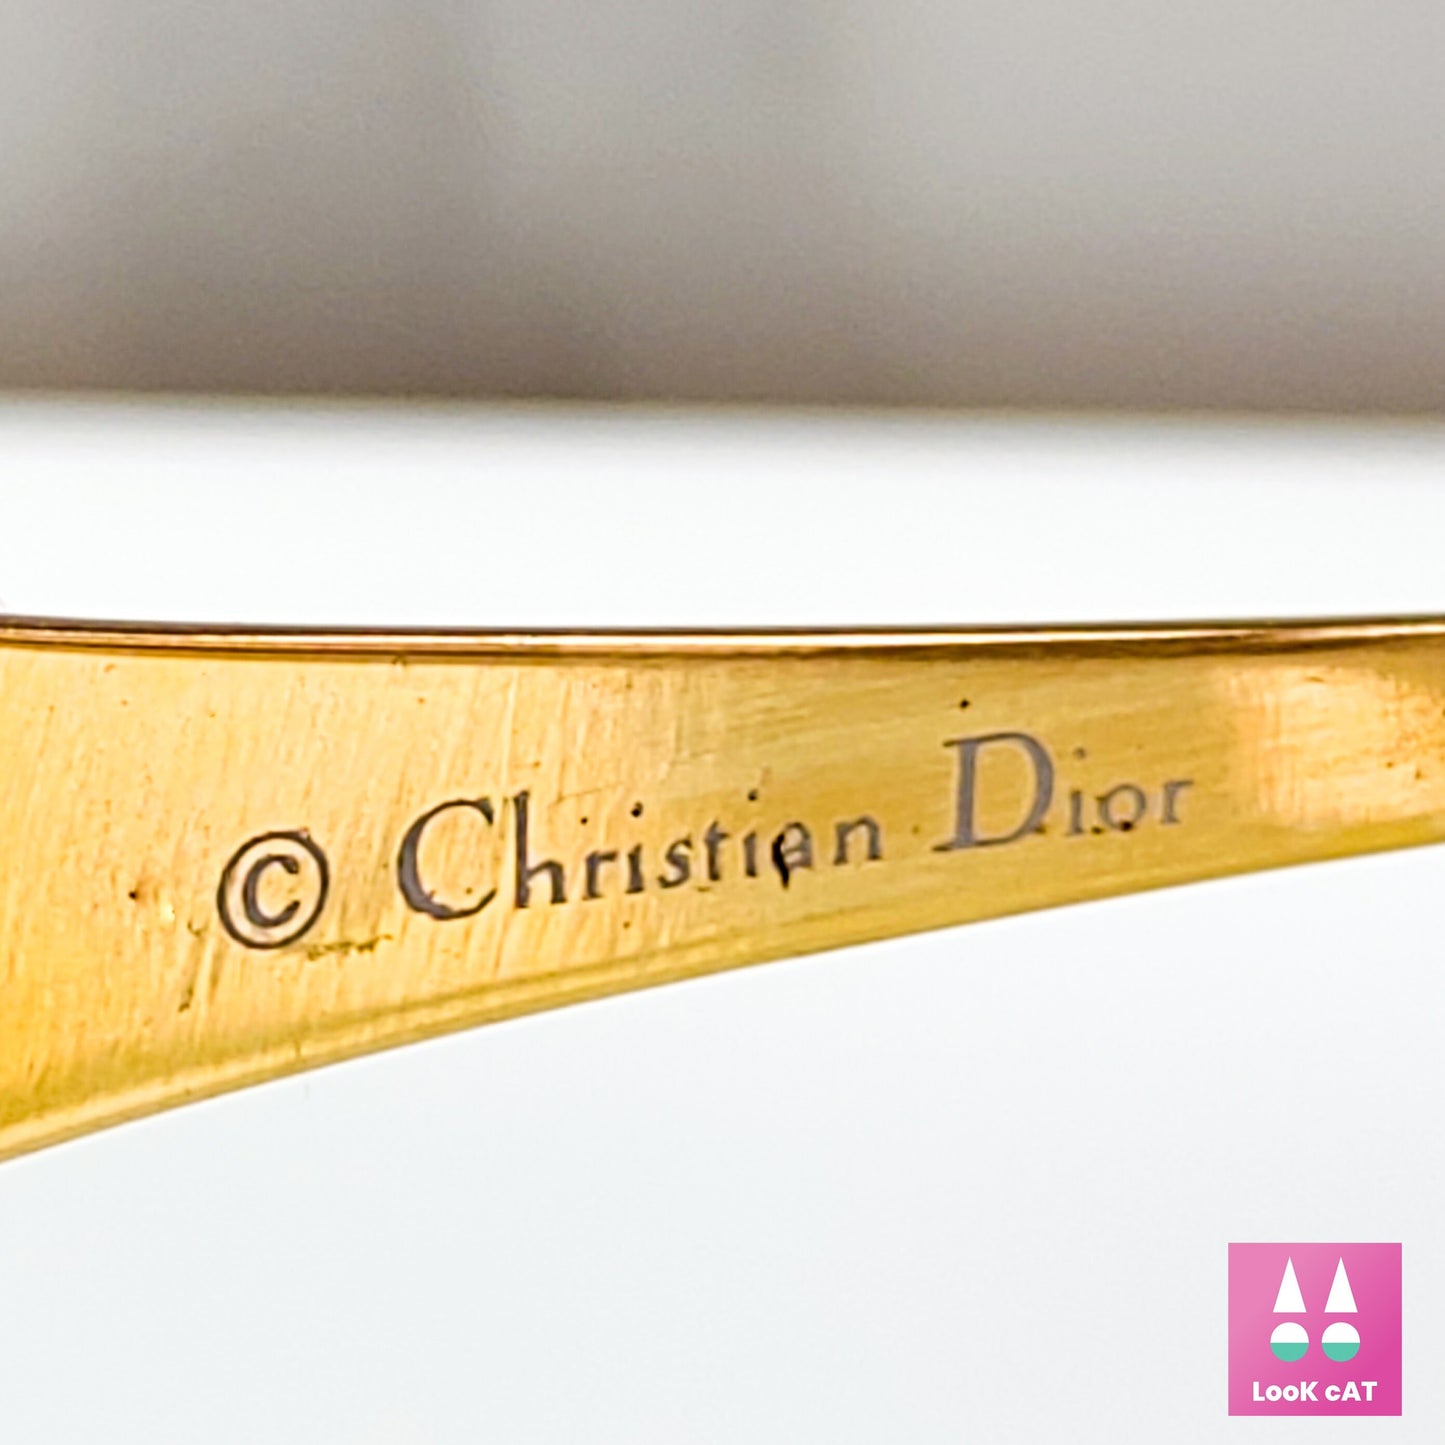 Christian Dior Galactique occhiali da sole vintage occhiali gafas y2k made in Italy avvolgente maschera scudo avvolgente